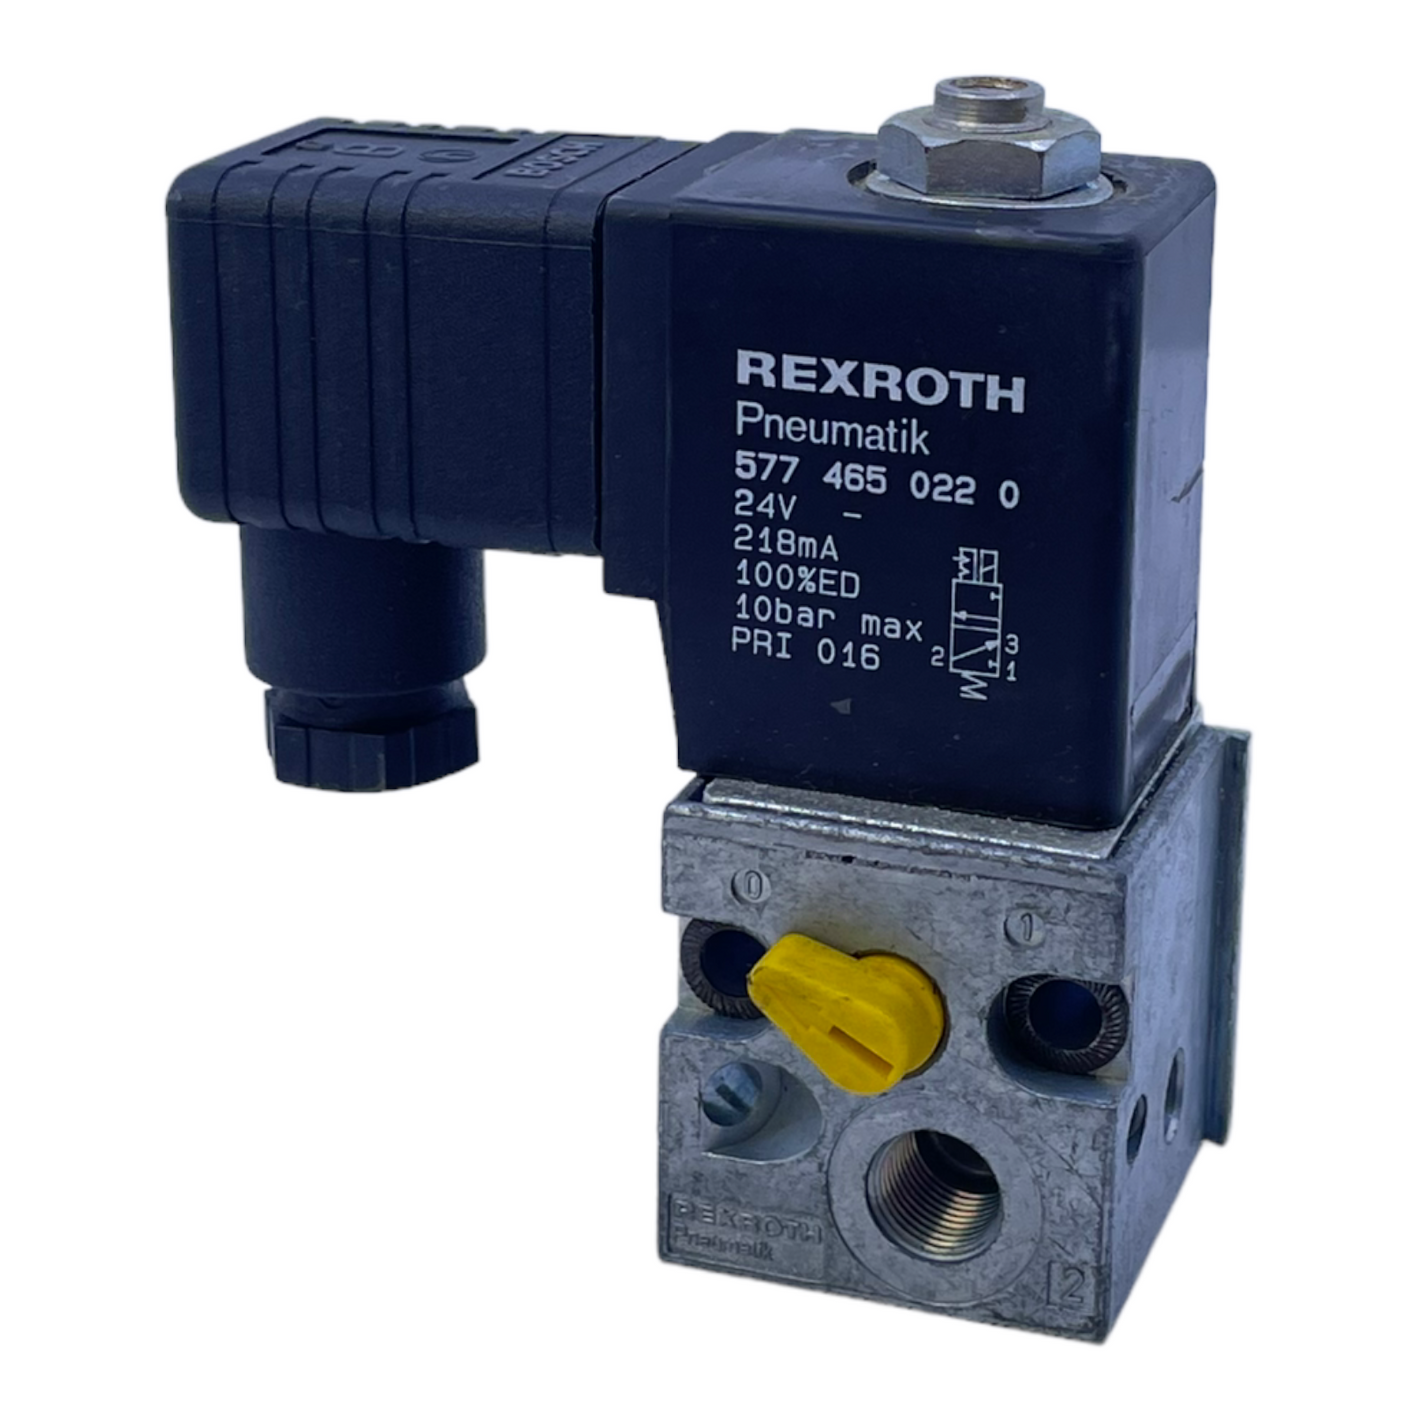 Rexroth 577 465 022 0 directional control valve 24V 10bar 218mA